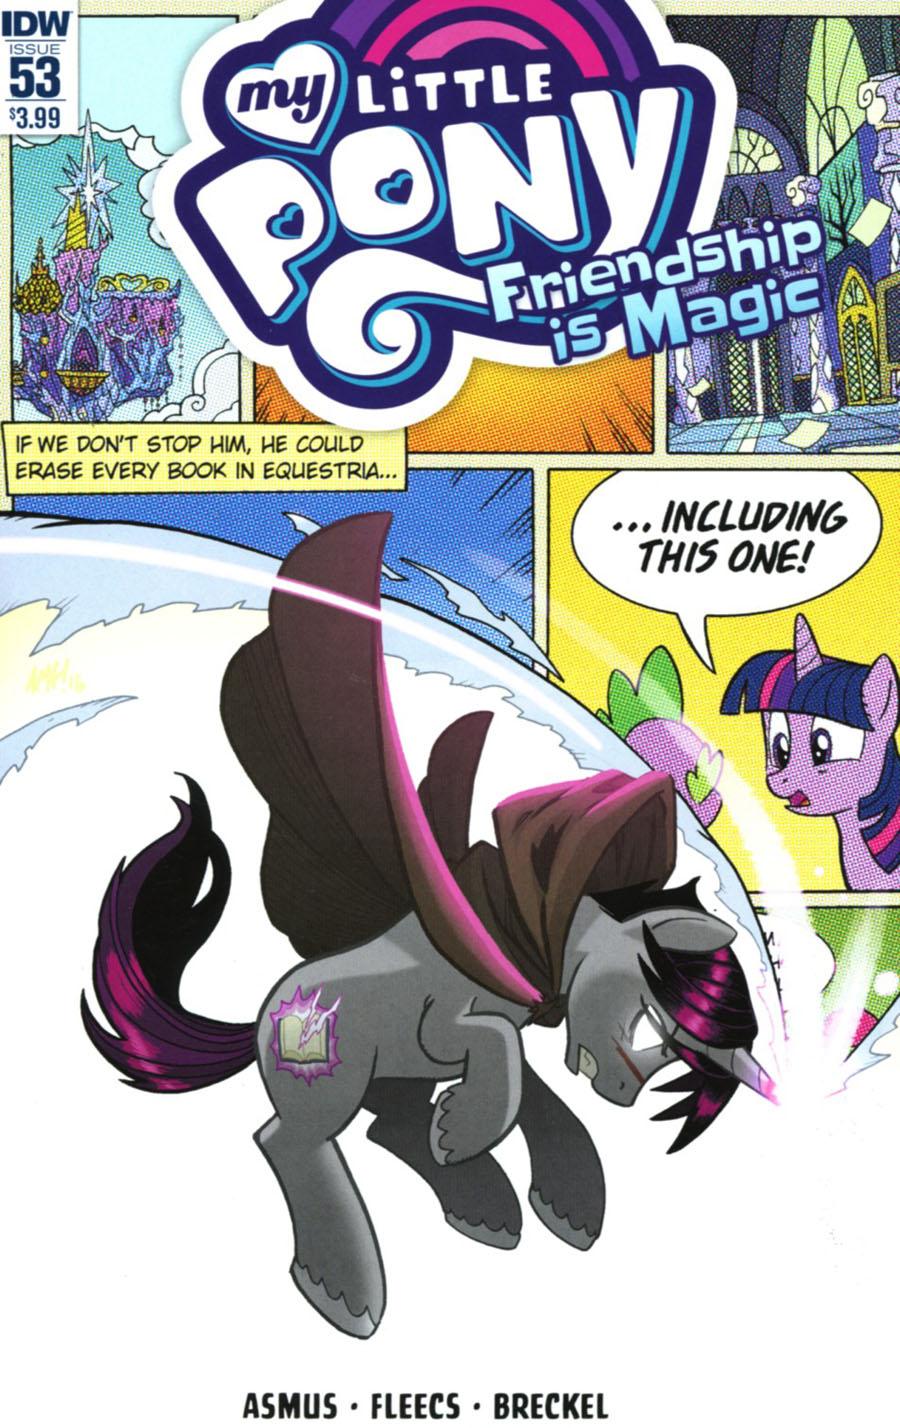 My Little Pony Friendship Is Magic Vol. 1 #53